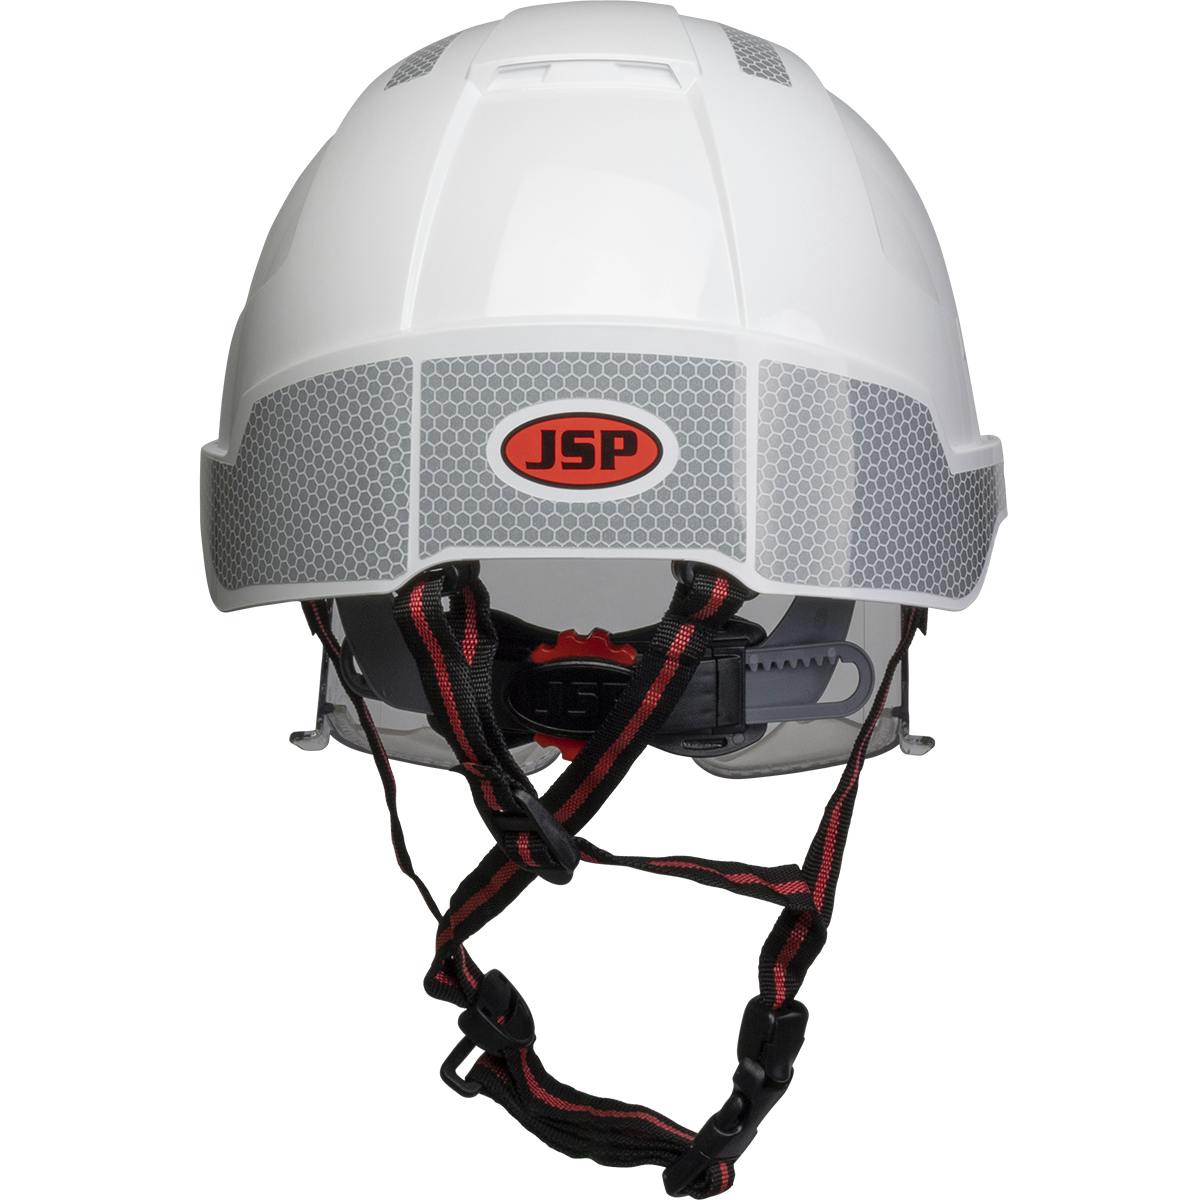 JSP® Reflective kit for the EVOVista (281-EVCR2)